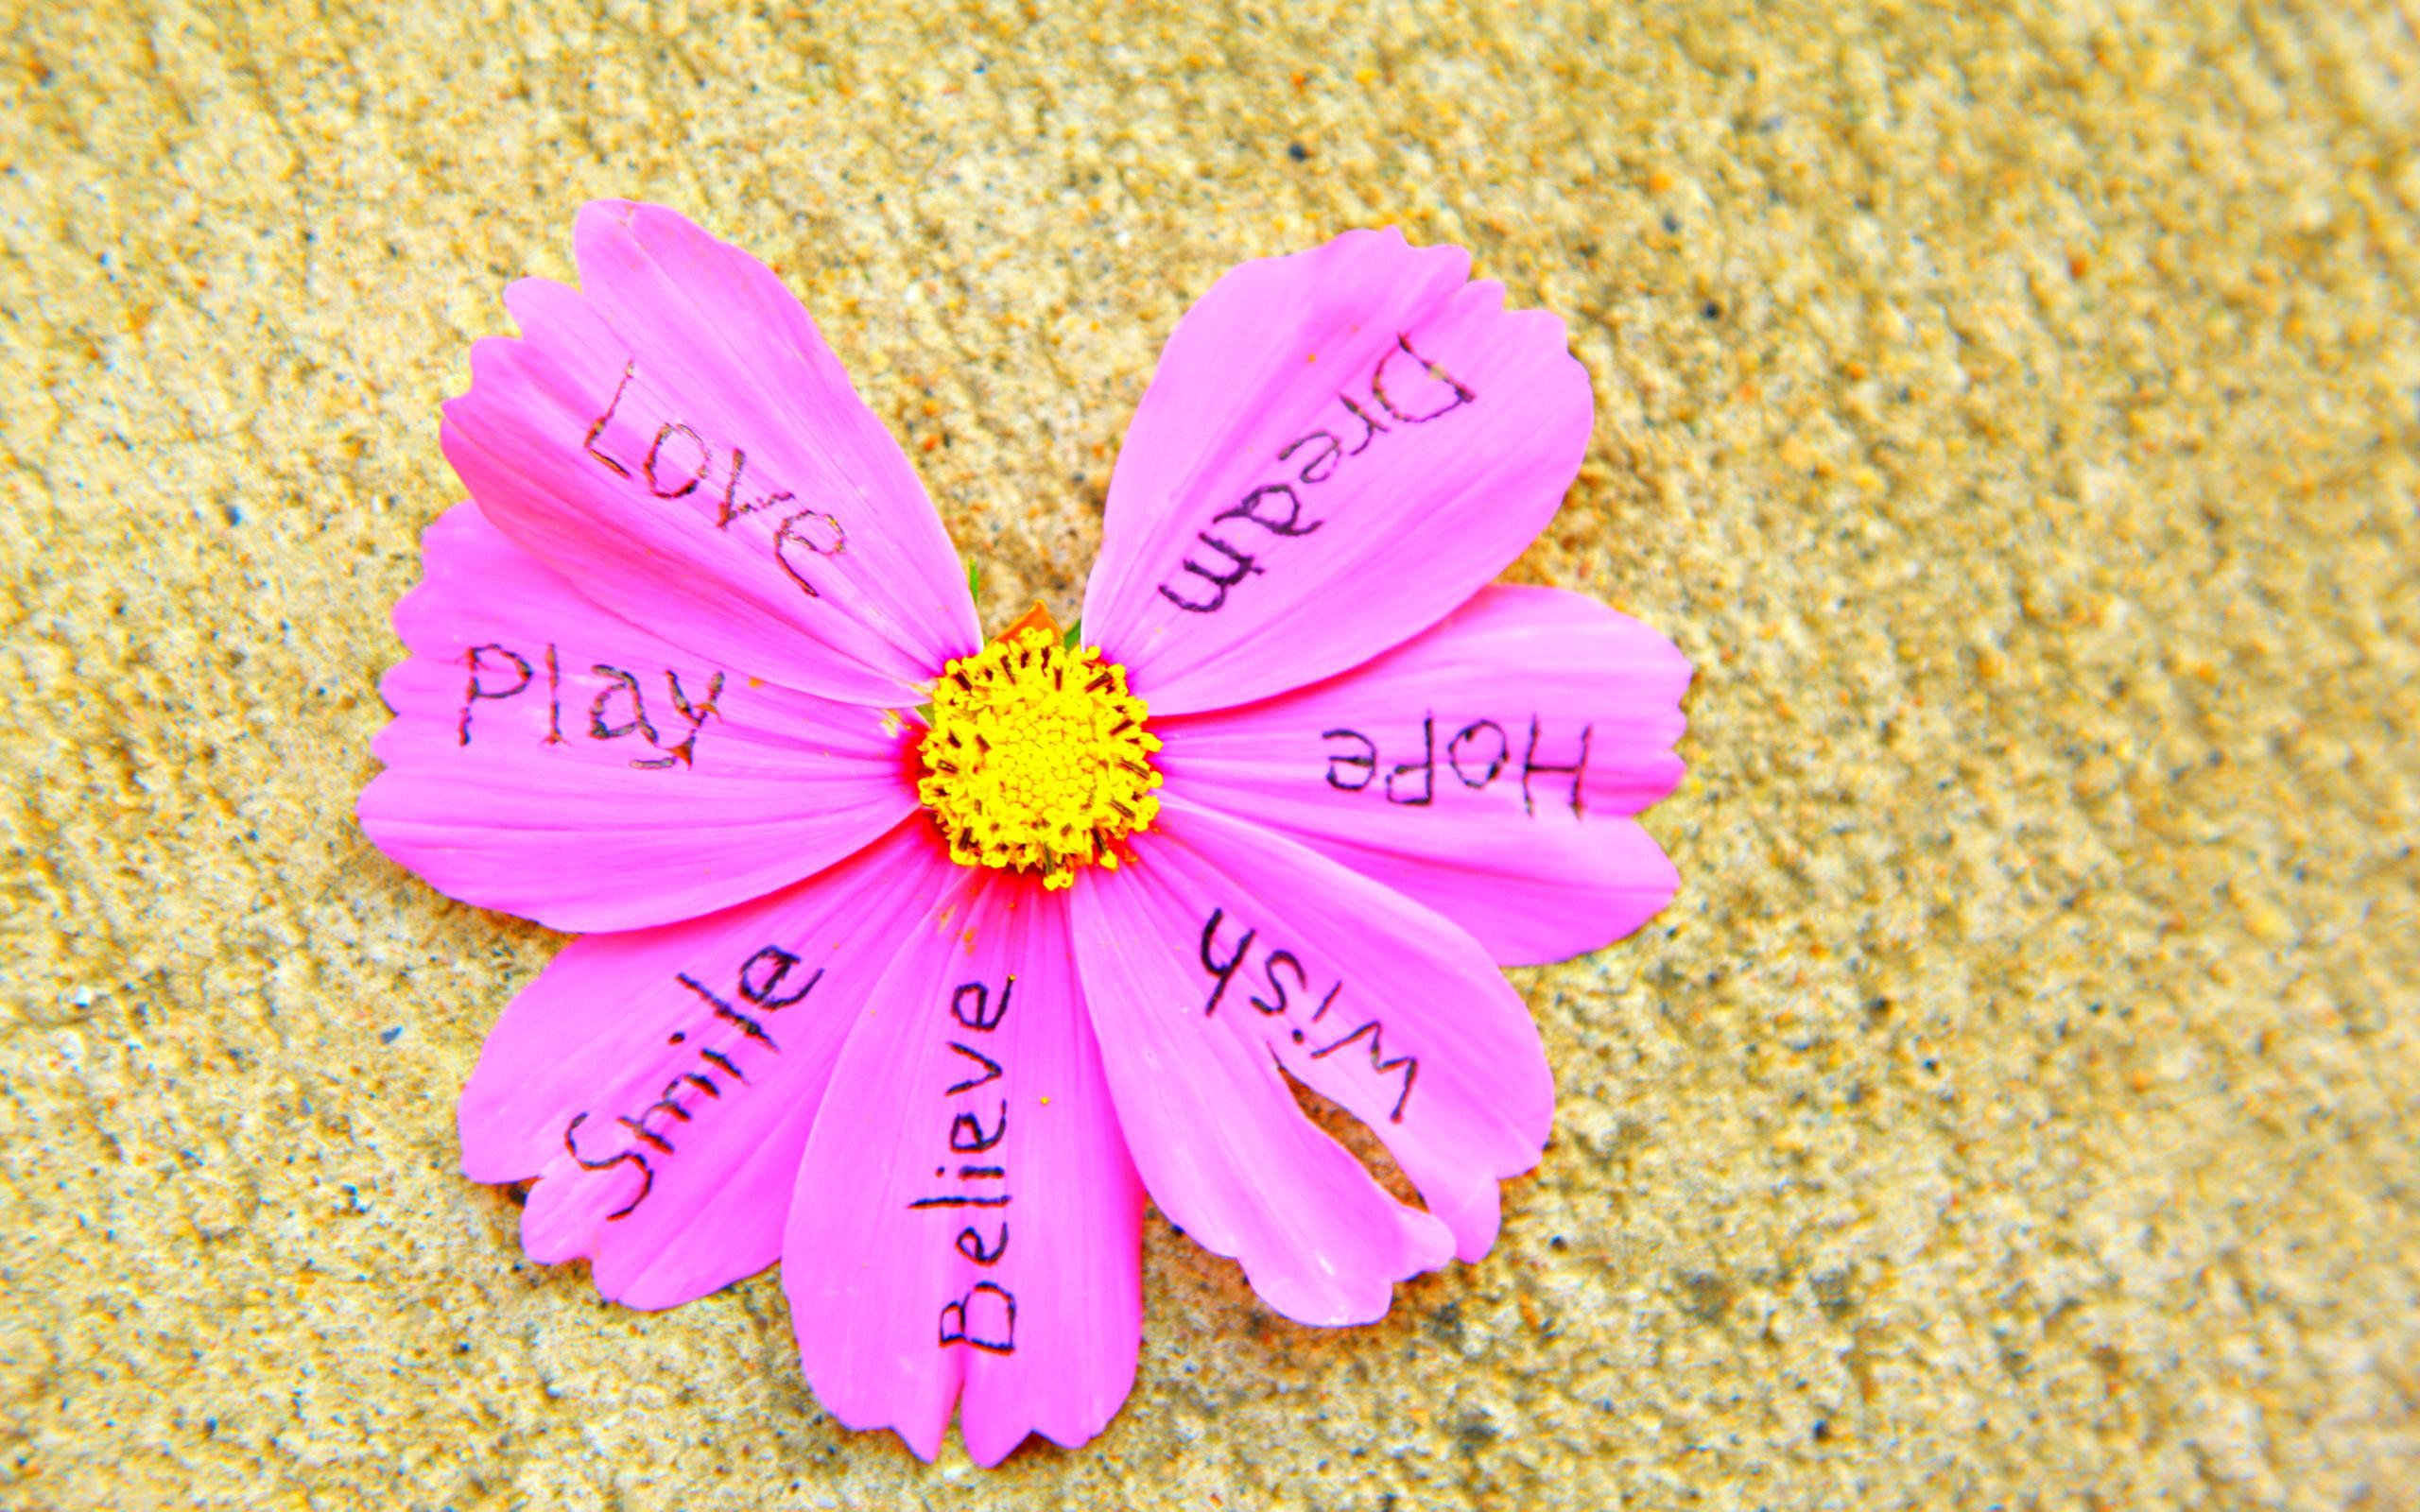 Dream, Believe, Love - Words On Flower Petals - HD Wallpaper 